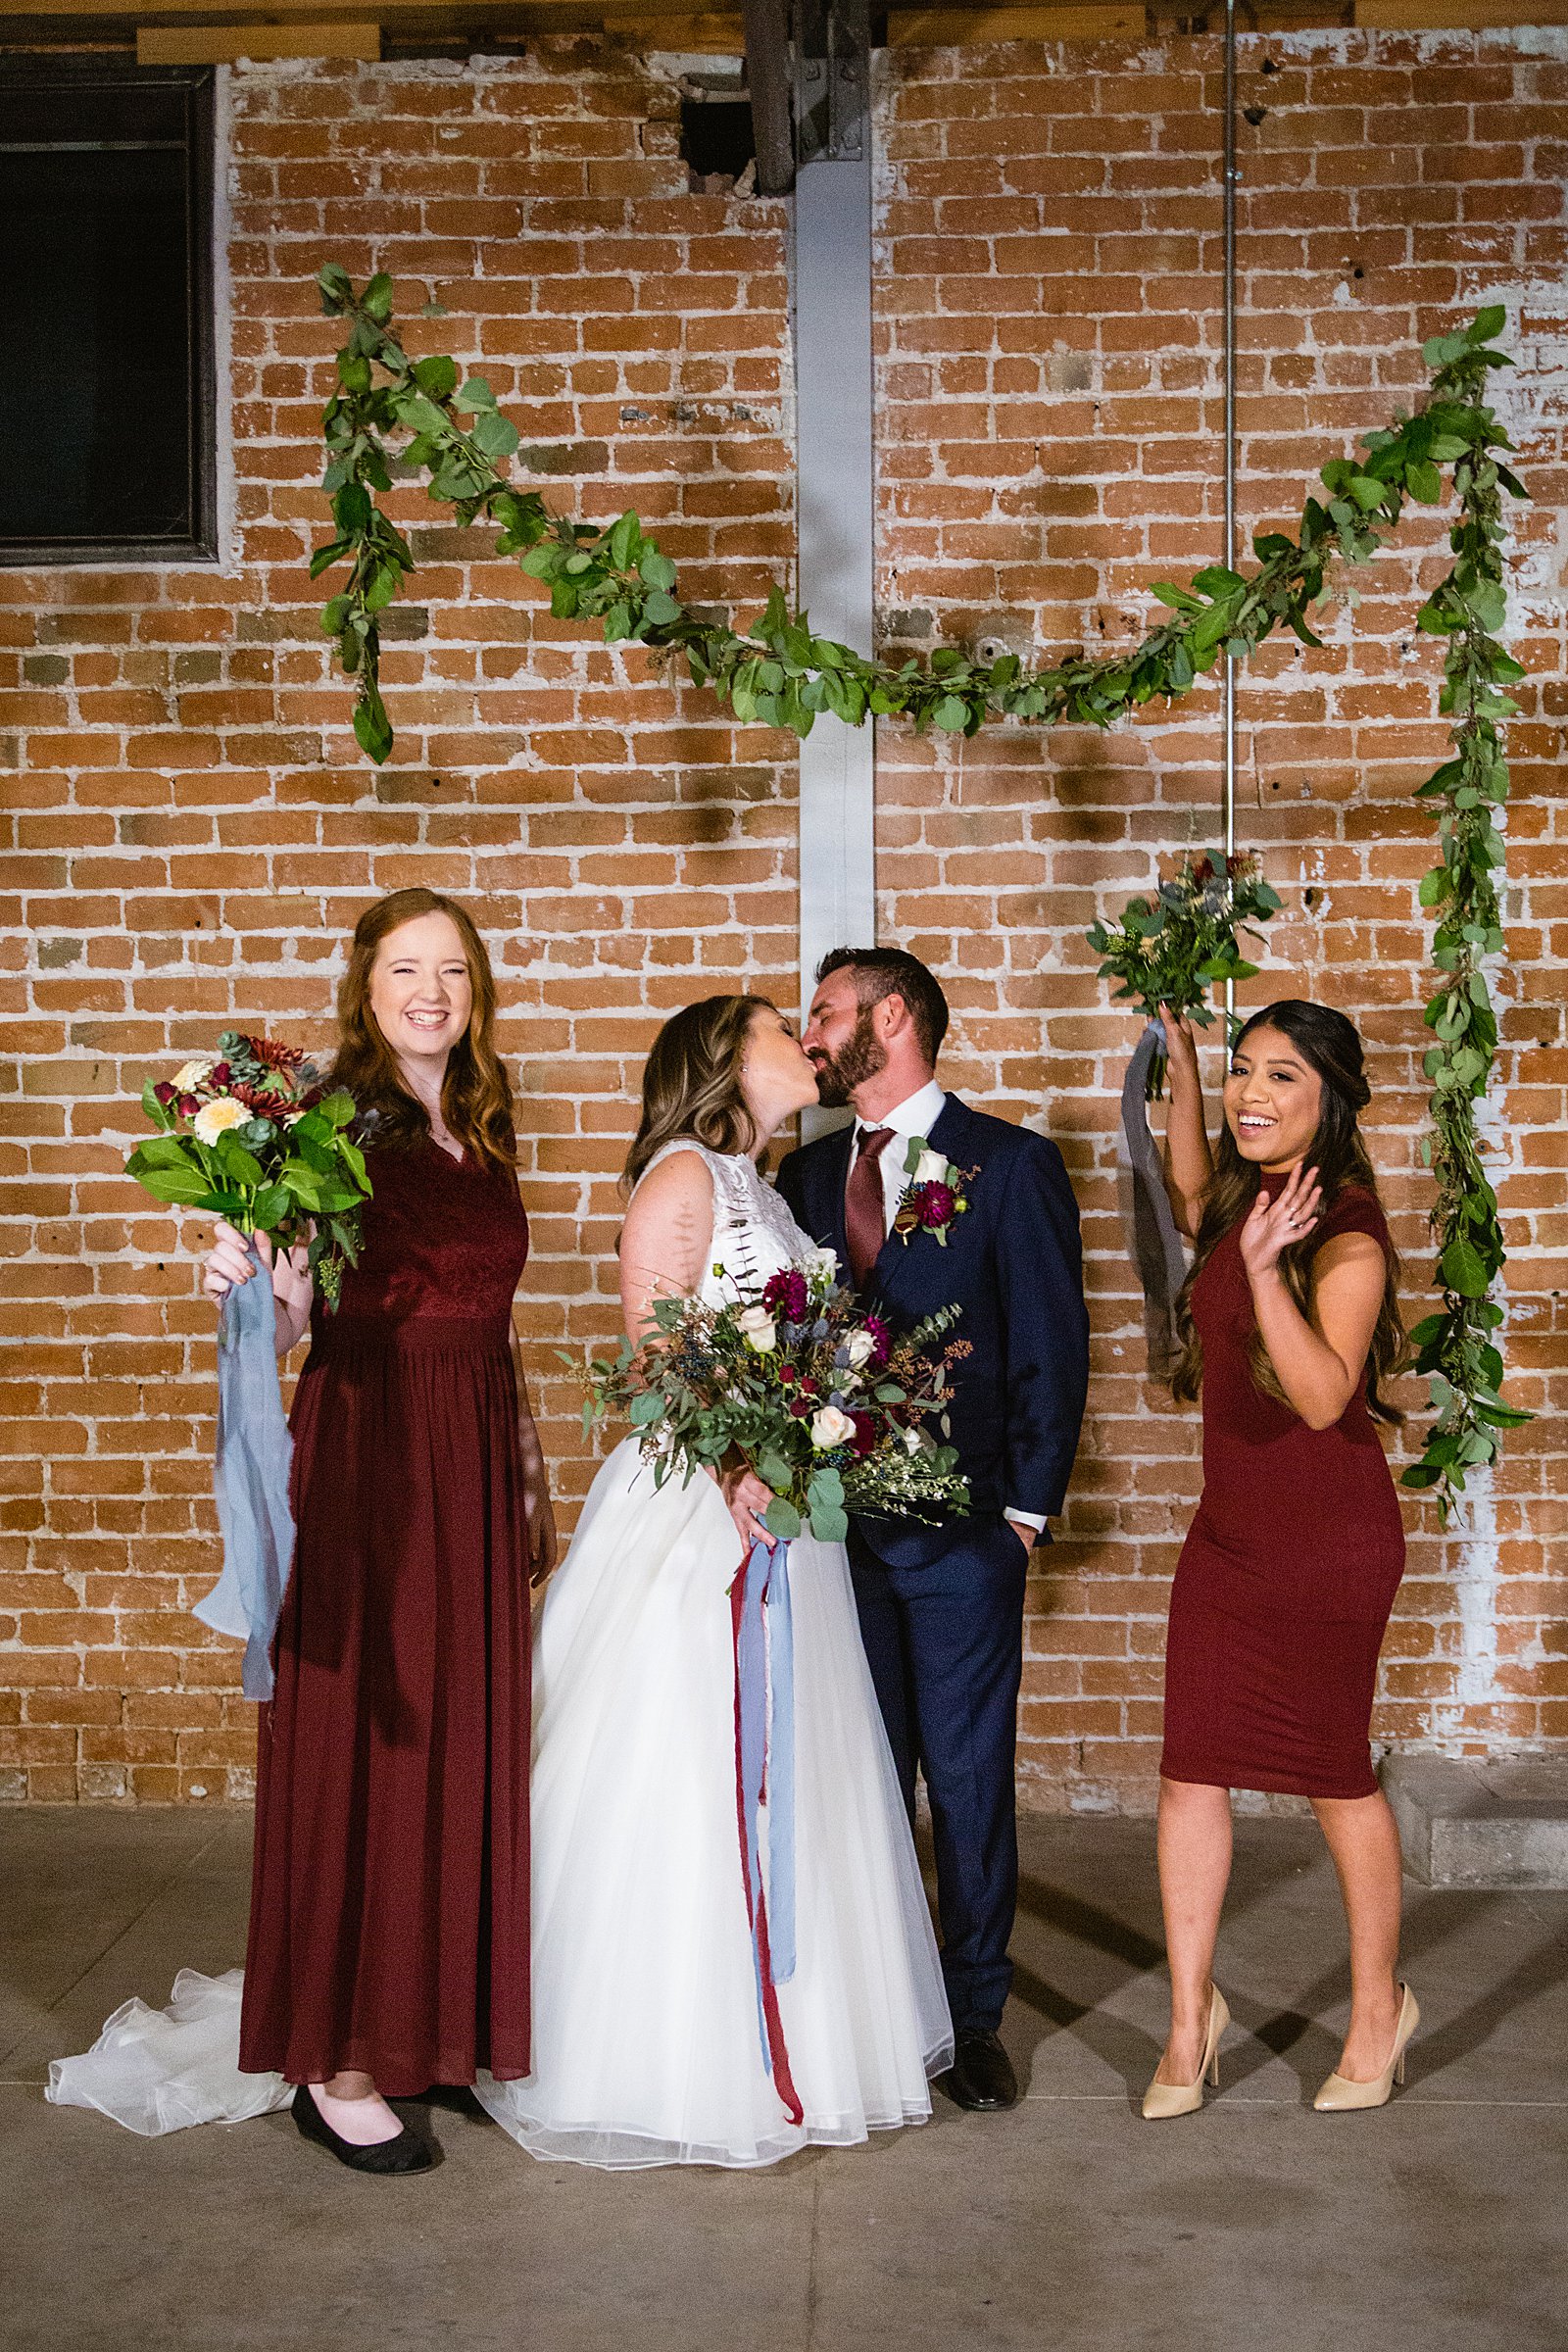 Bridal party having fun together at Sunkist Warehouse weding by Arizona wedding photographer PMA Photography.